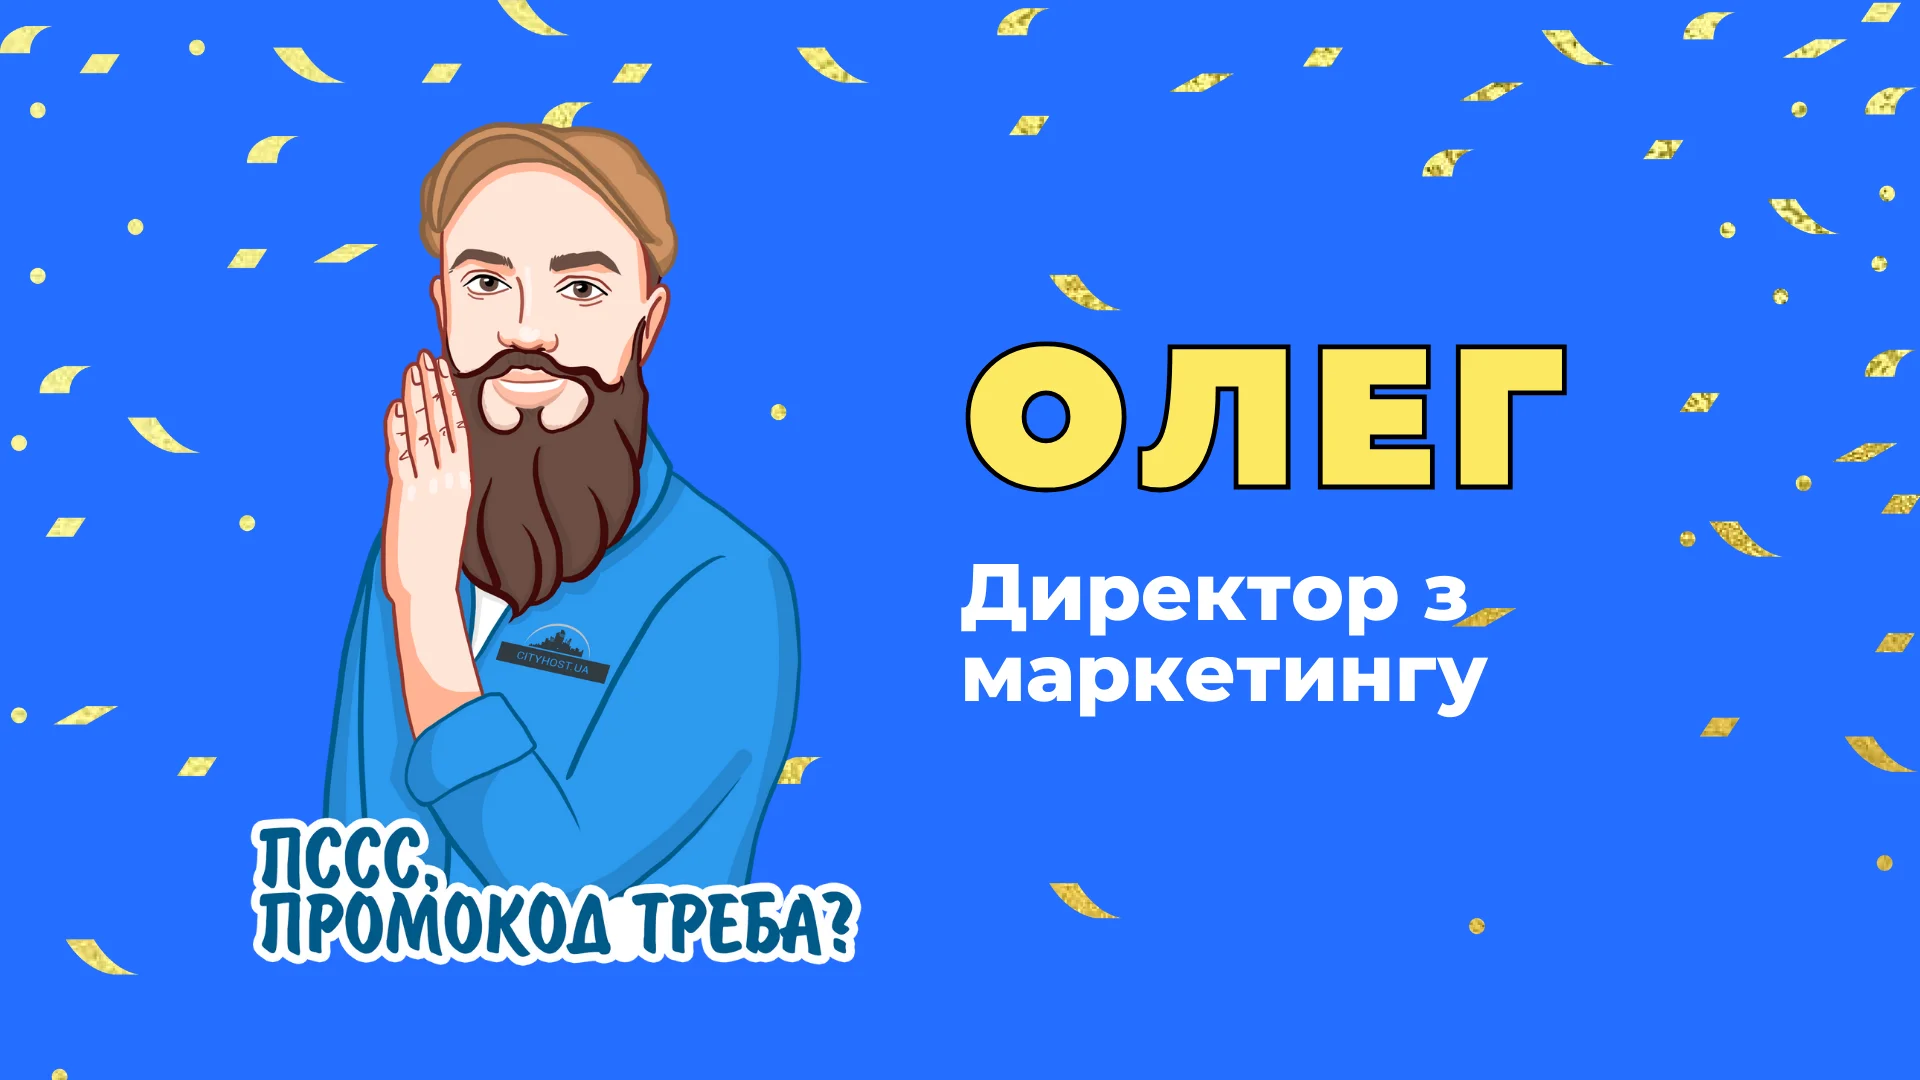 Oleg - marketing director